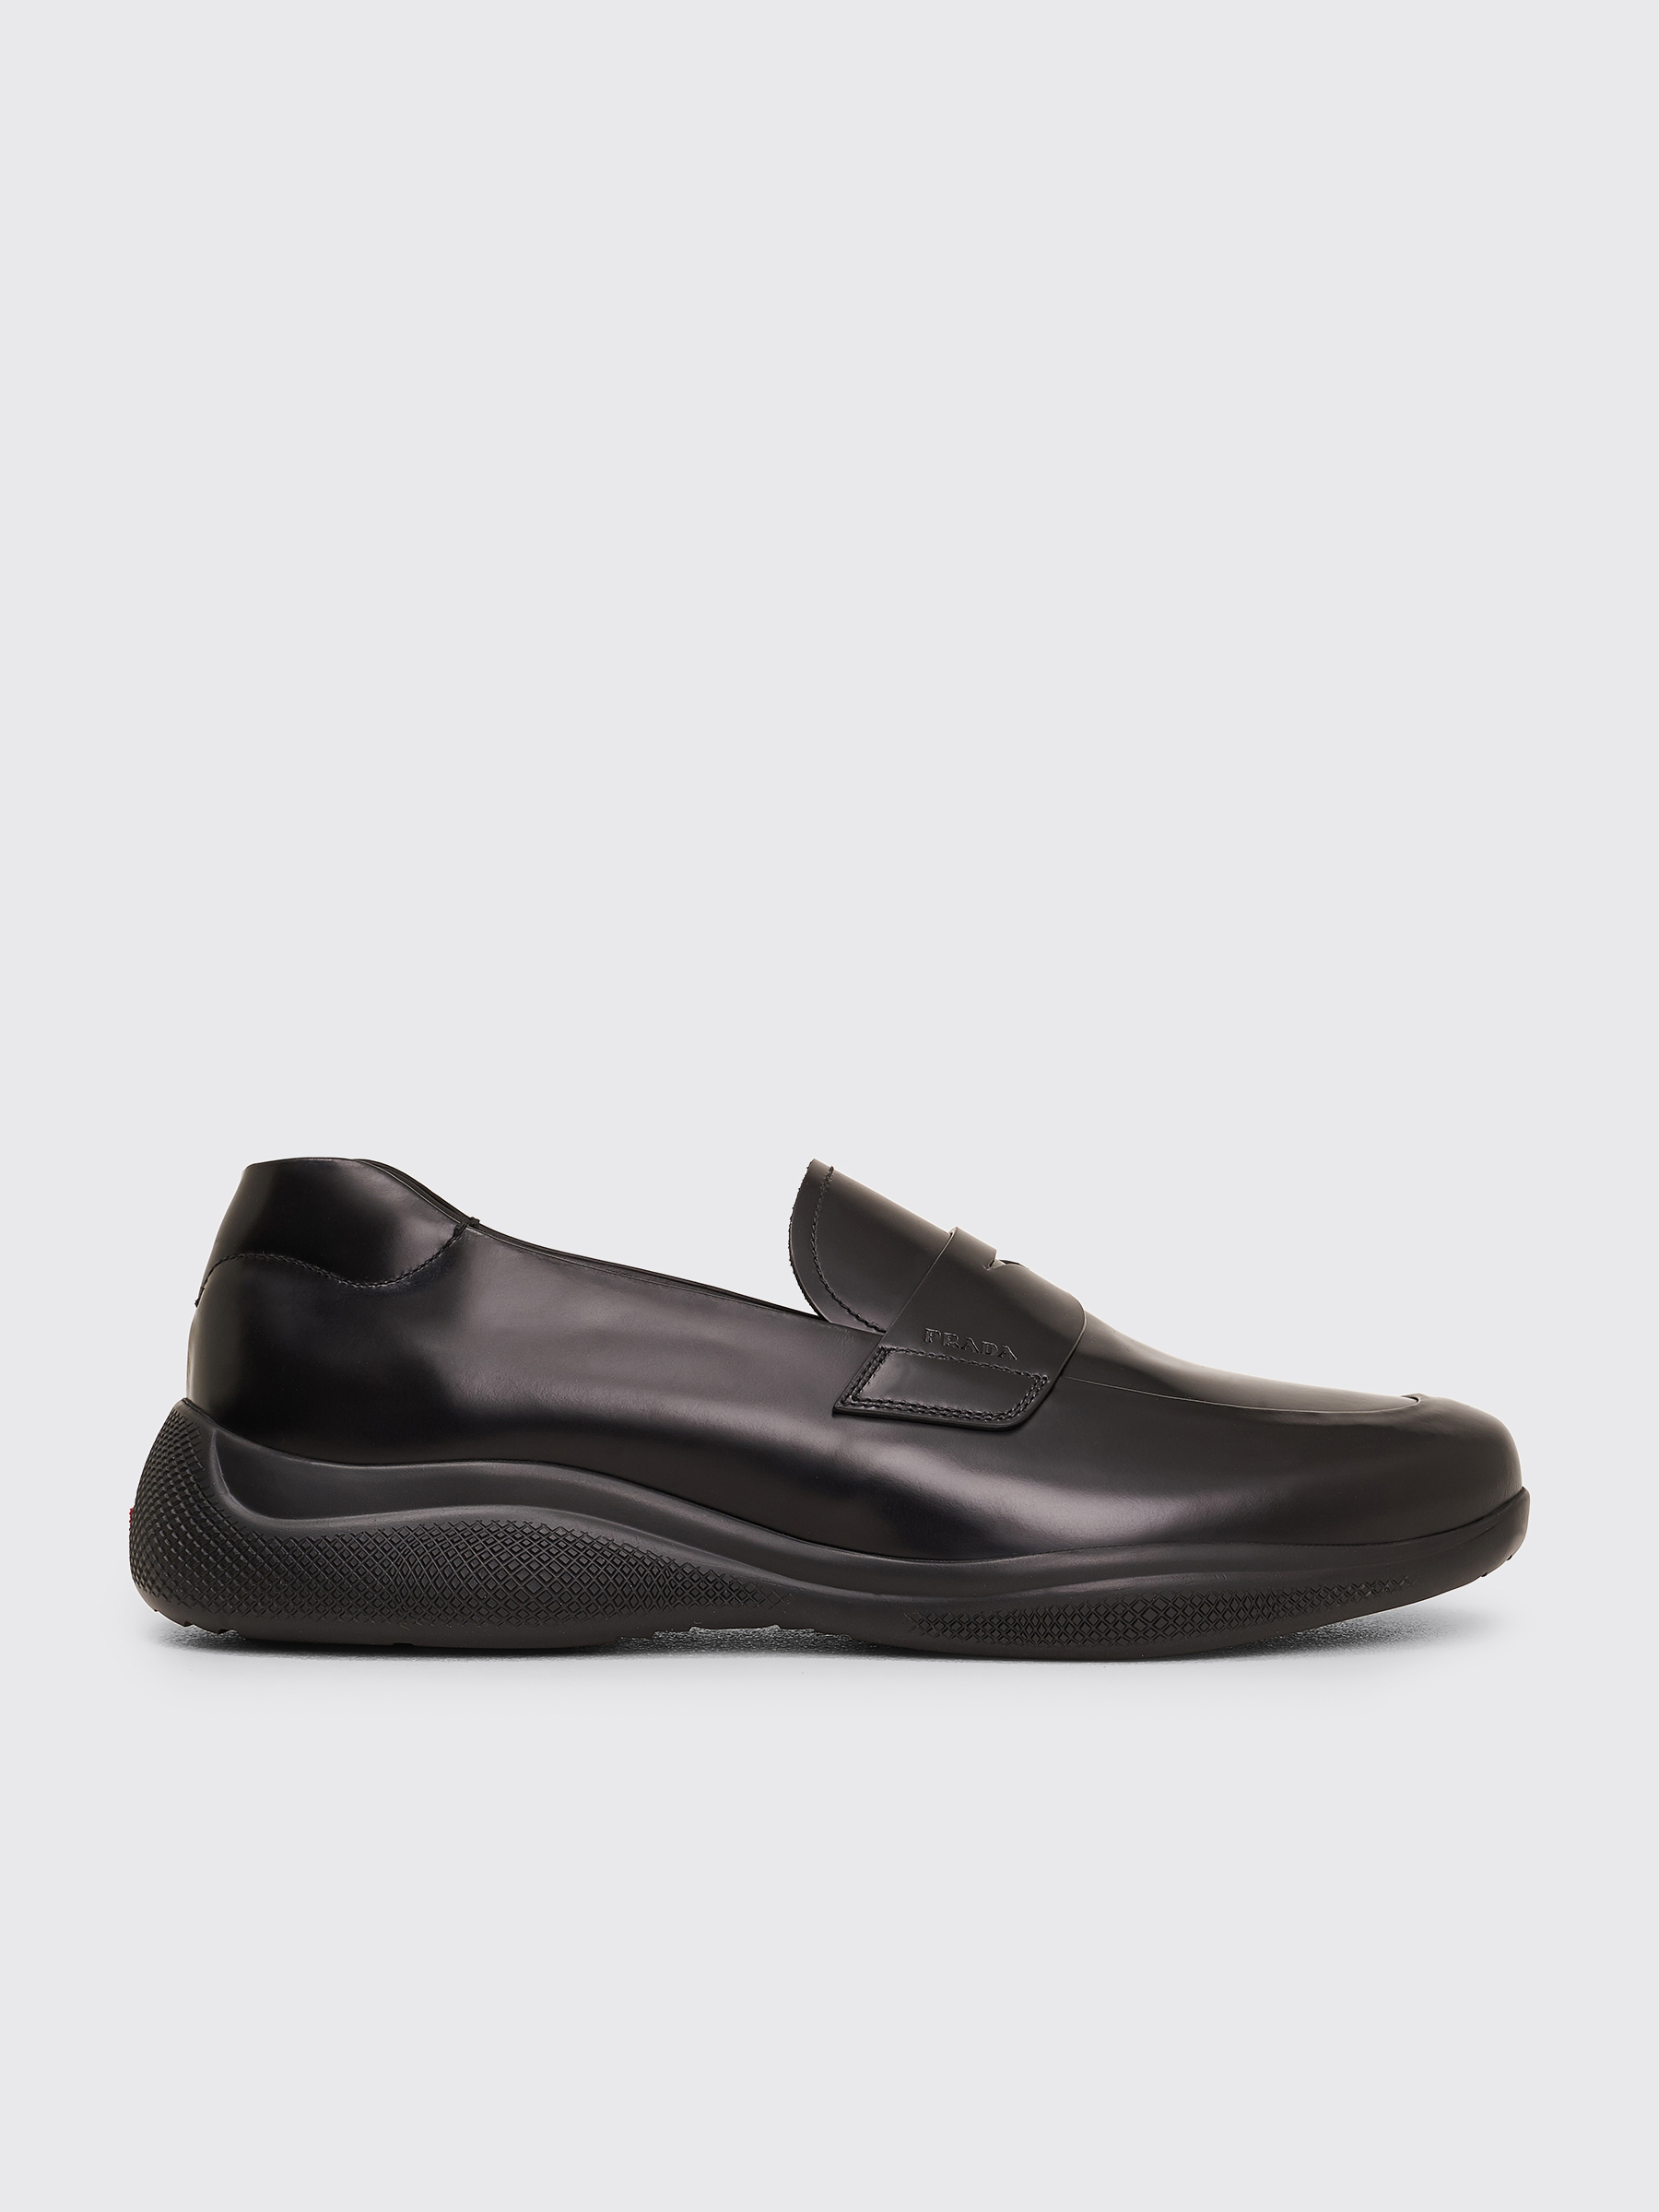 prada loafer shoes